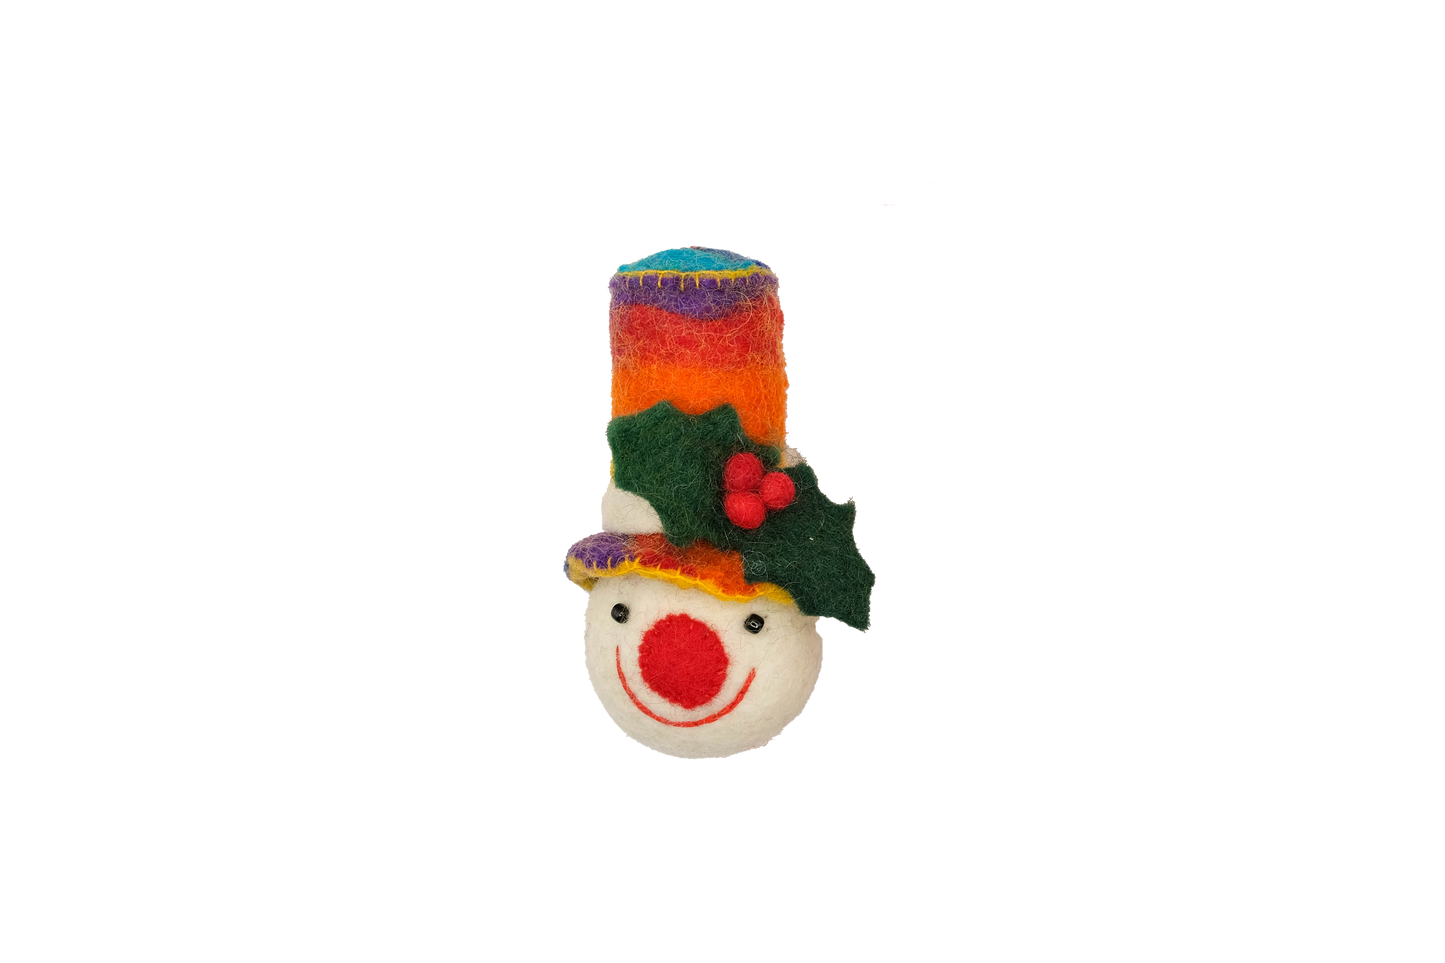 Rainbow Top Hat Snow Friend Handmade Felt Ornament